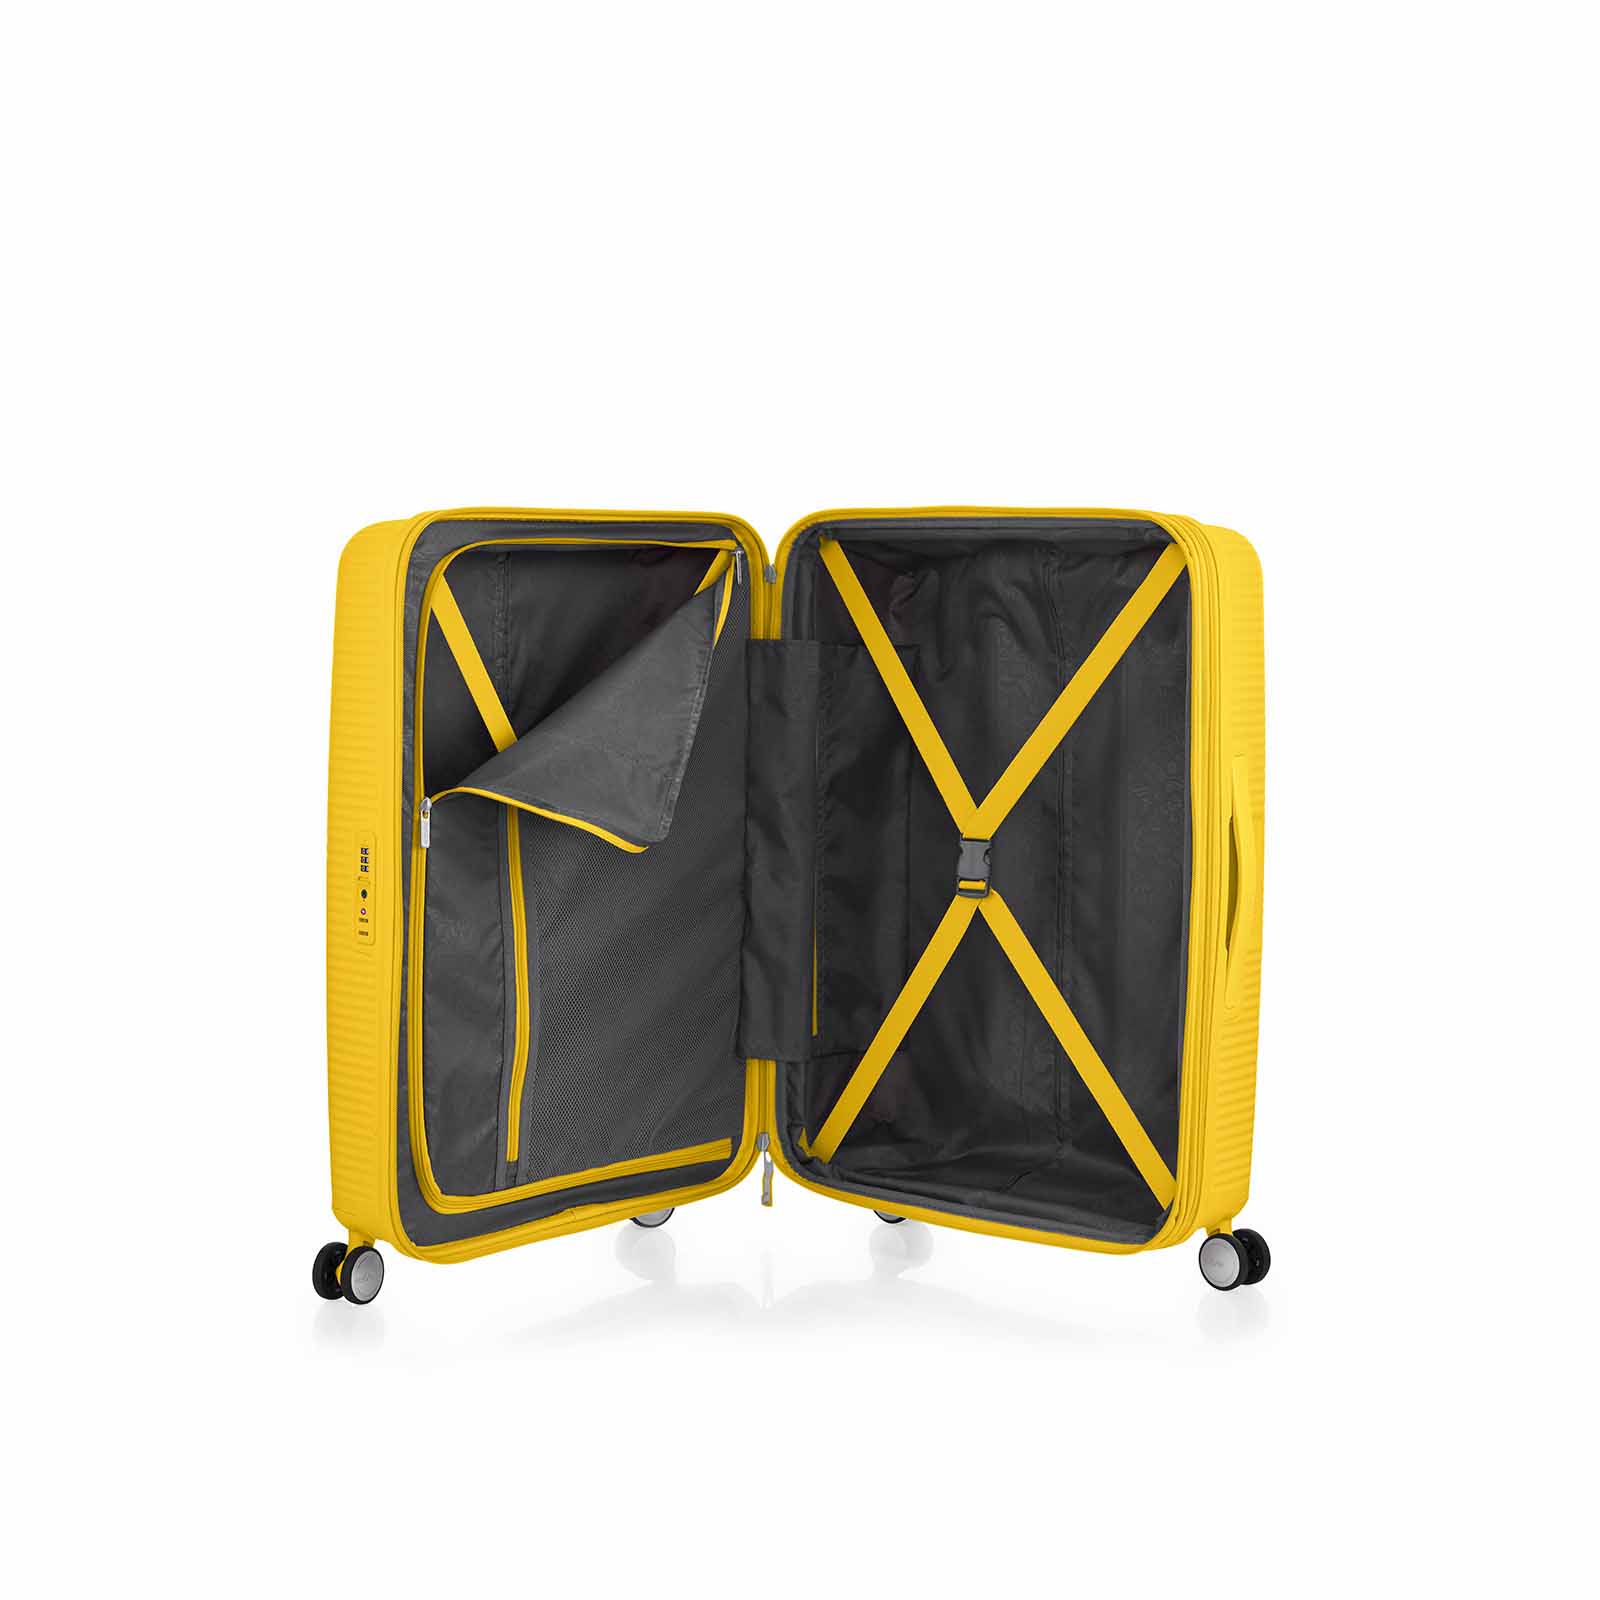 American-Tourister-Curio-2-69cm-Suitcase-Golden-Yellow-Open